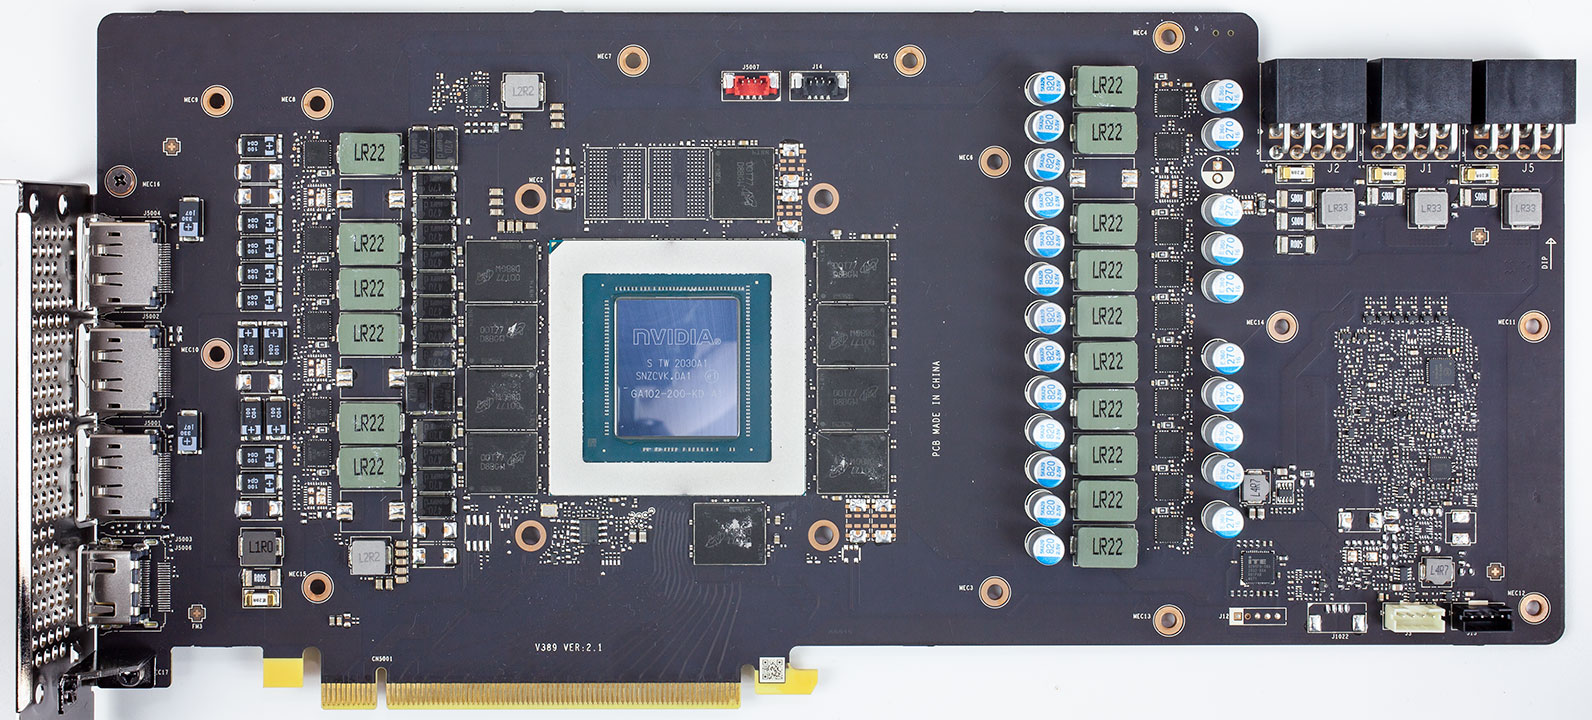 MSI GeForce RTX 3080 Gaming X Trio Review - Circuit Board Analysis